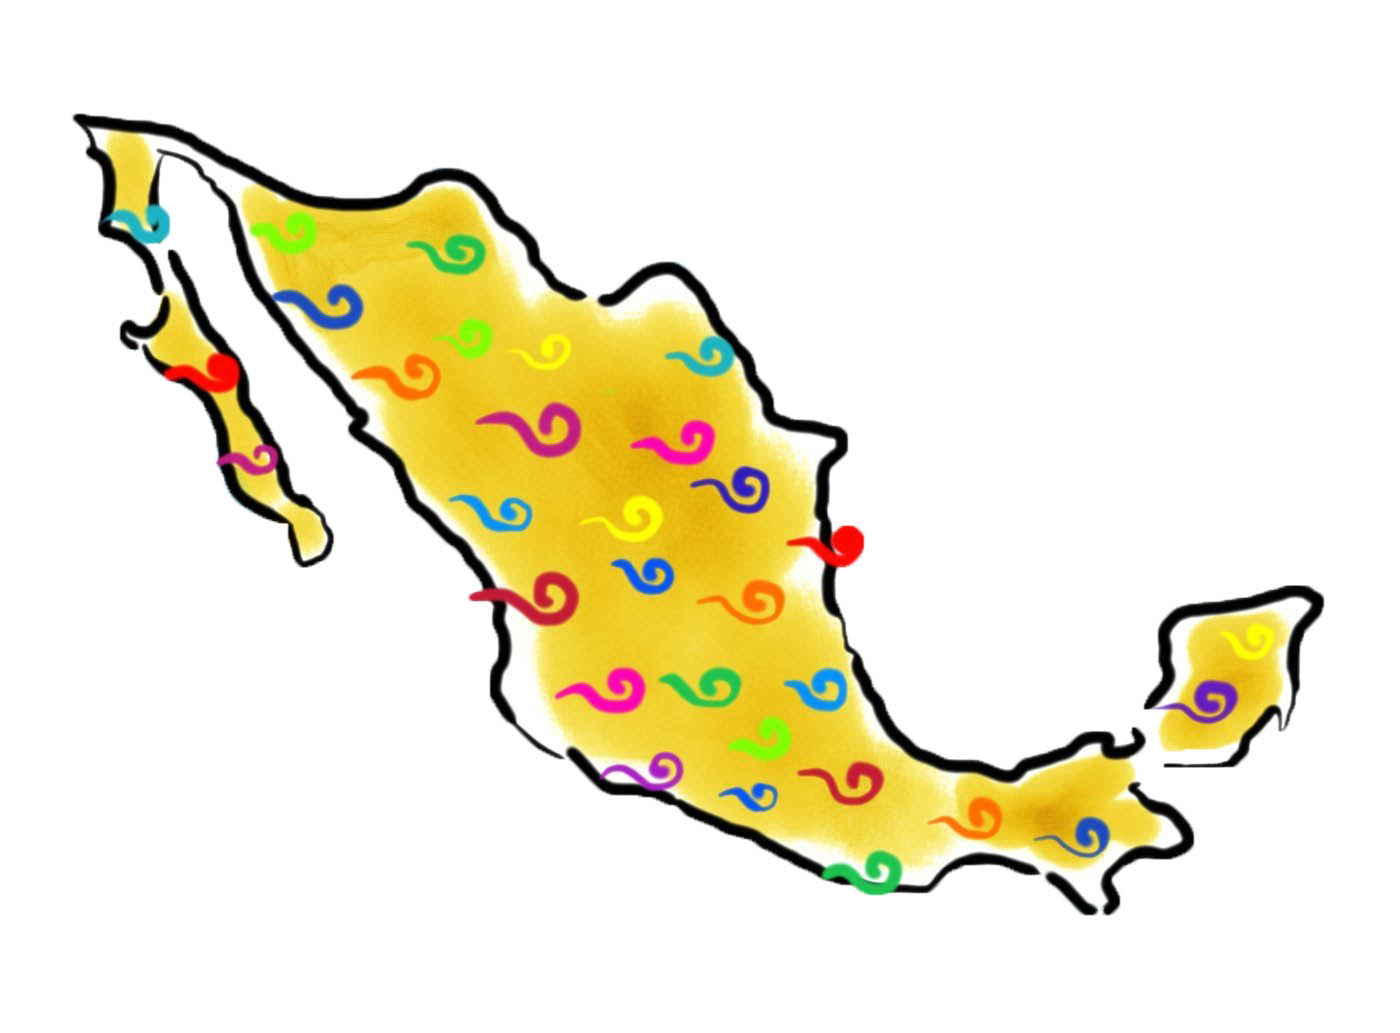 lenguas-originarias-mexico-preservacion-kernaia-proyecto-como-aprender-lengua-indigena-nahuatl